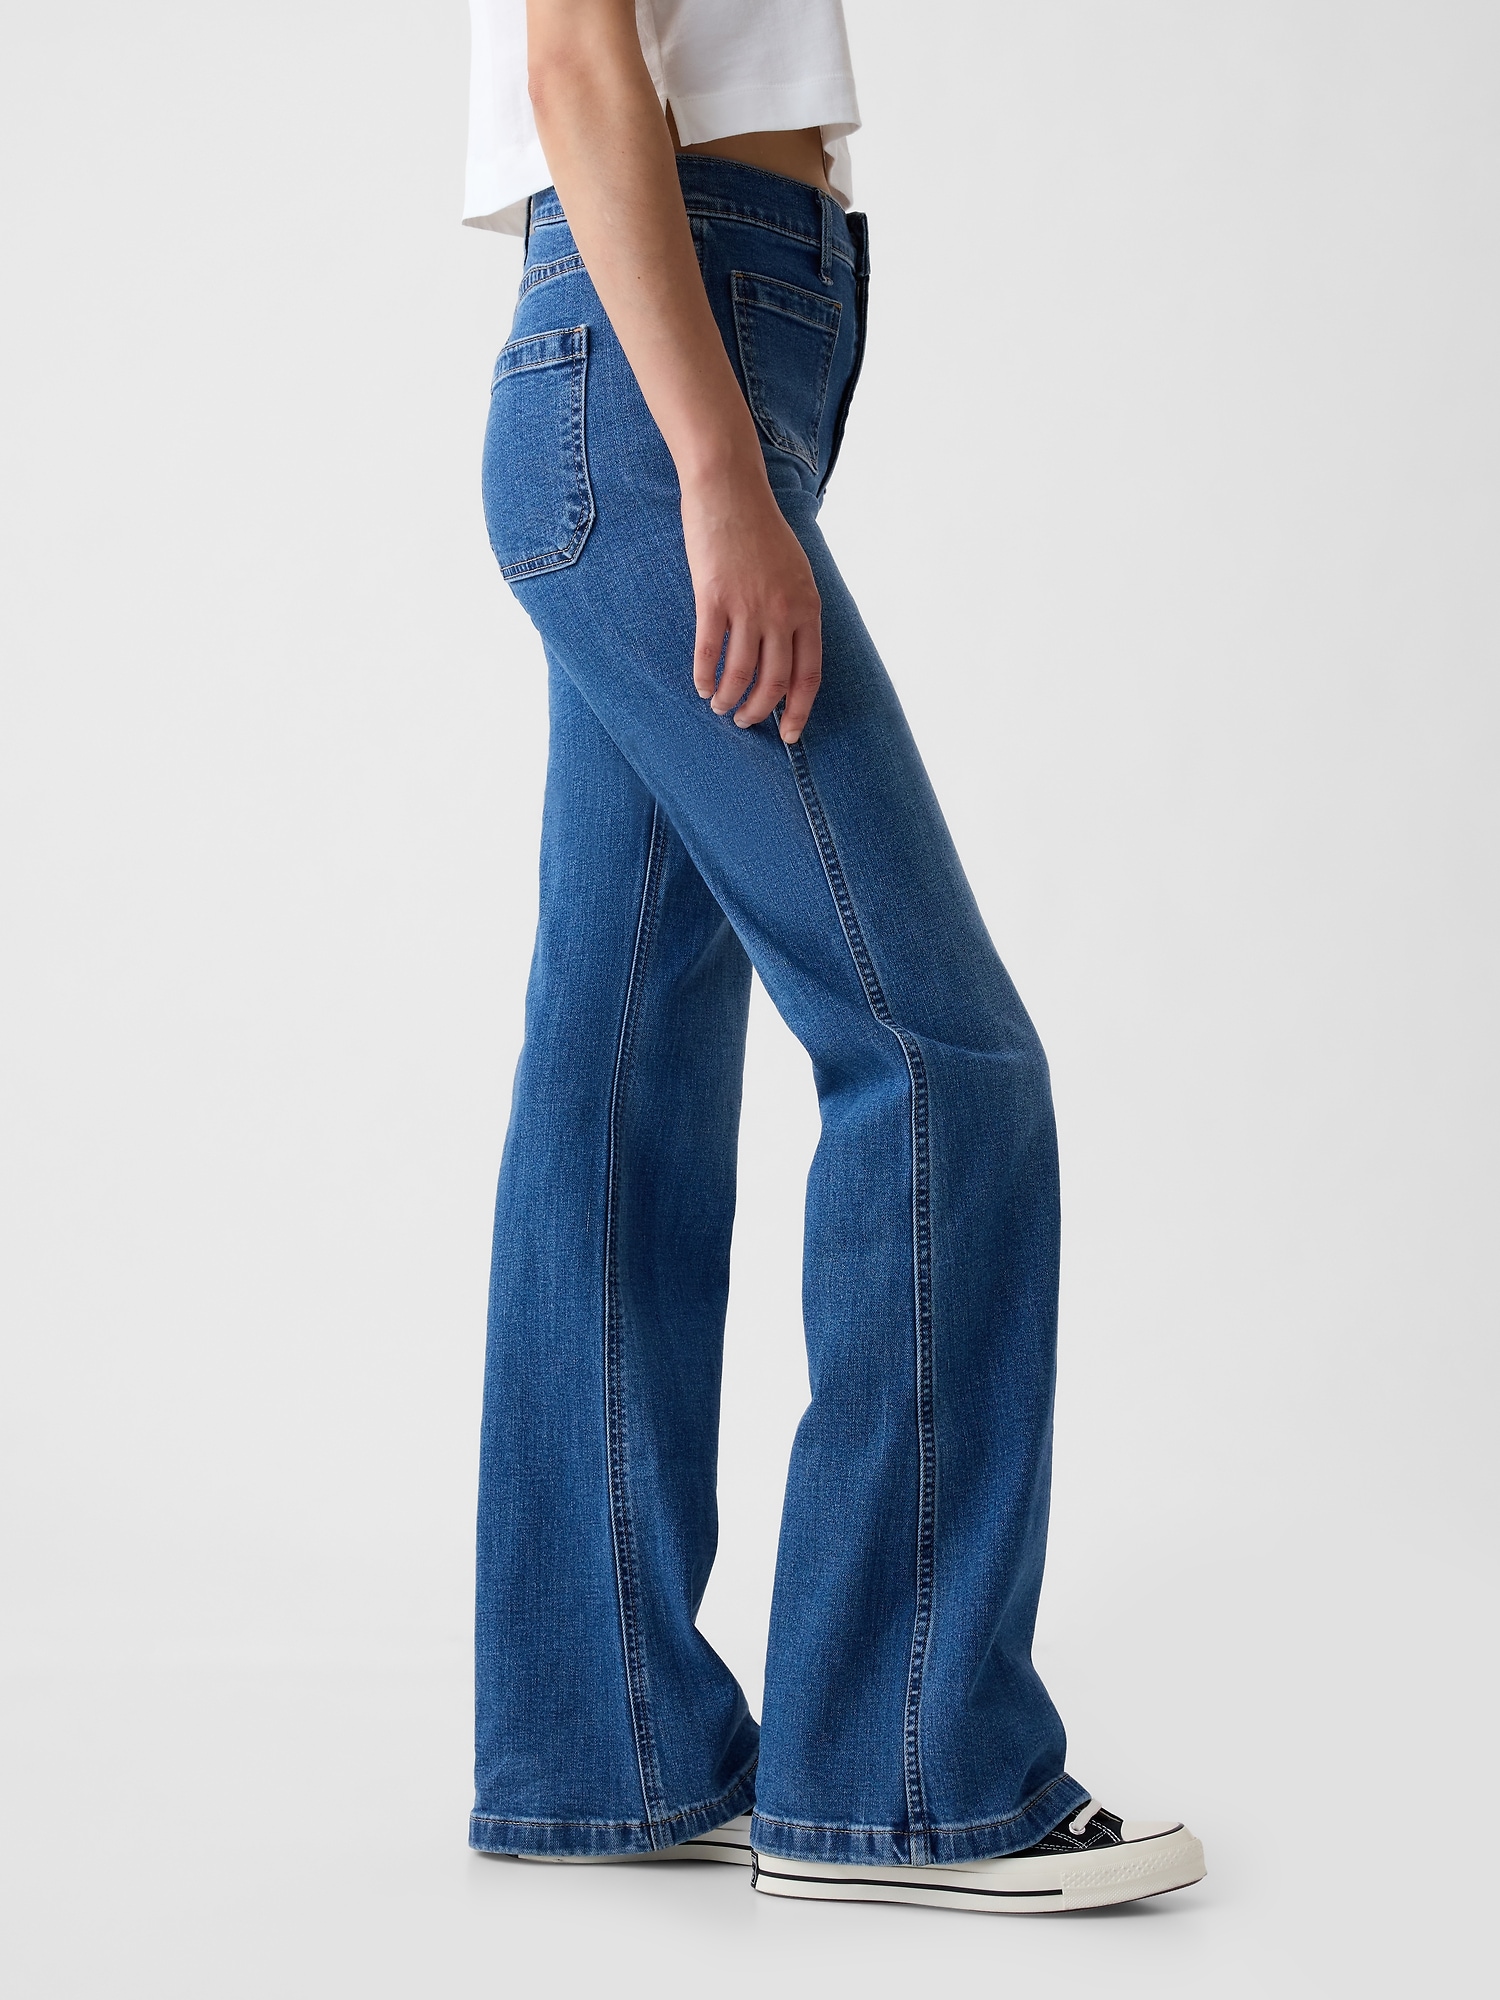 Gap Long & Lean Light Blue Distressed Jean | 12L | Gap trousers, Dark wash denim  jeans, Flare leg jeans